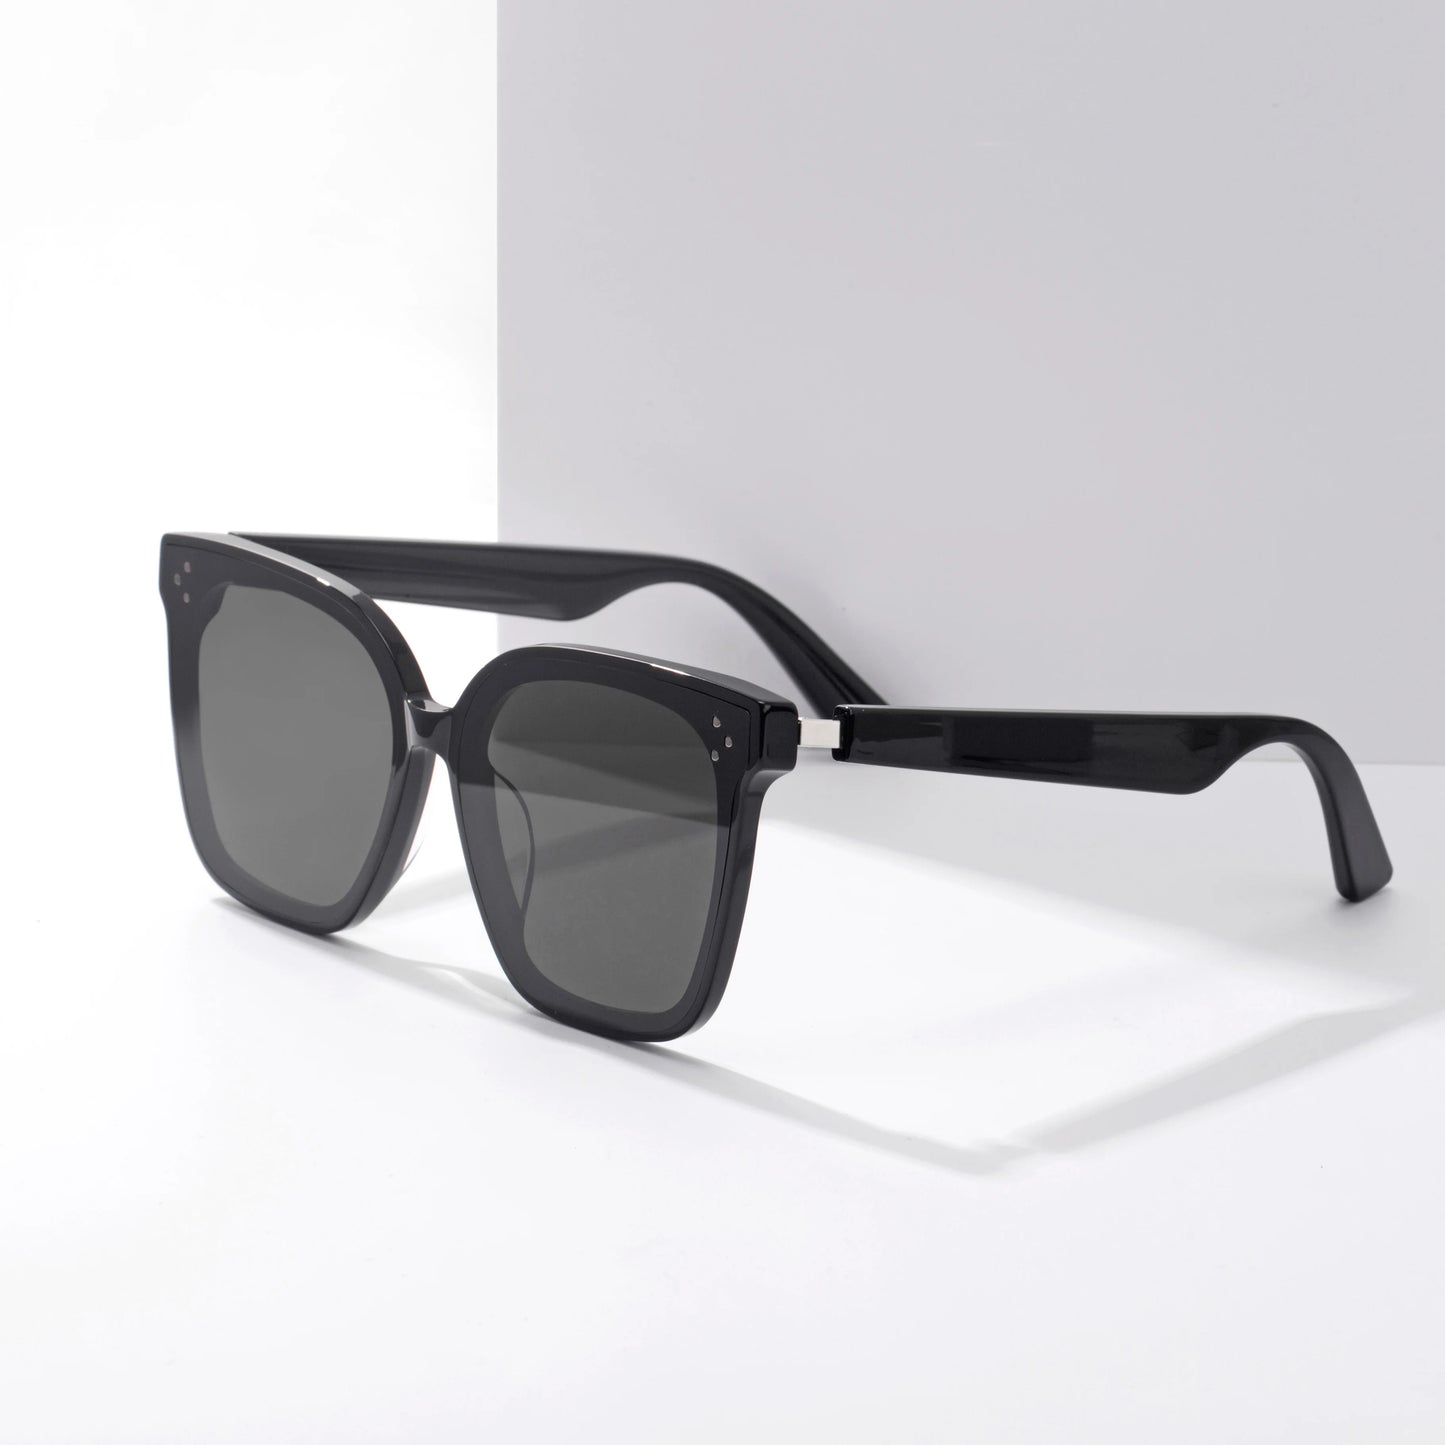 Fashion Bluetooth Eyeglasses: Trendy Polarized Smart Sunglasses with Music Audio